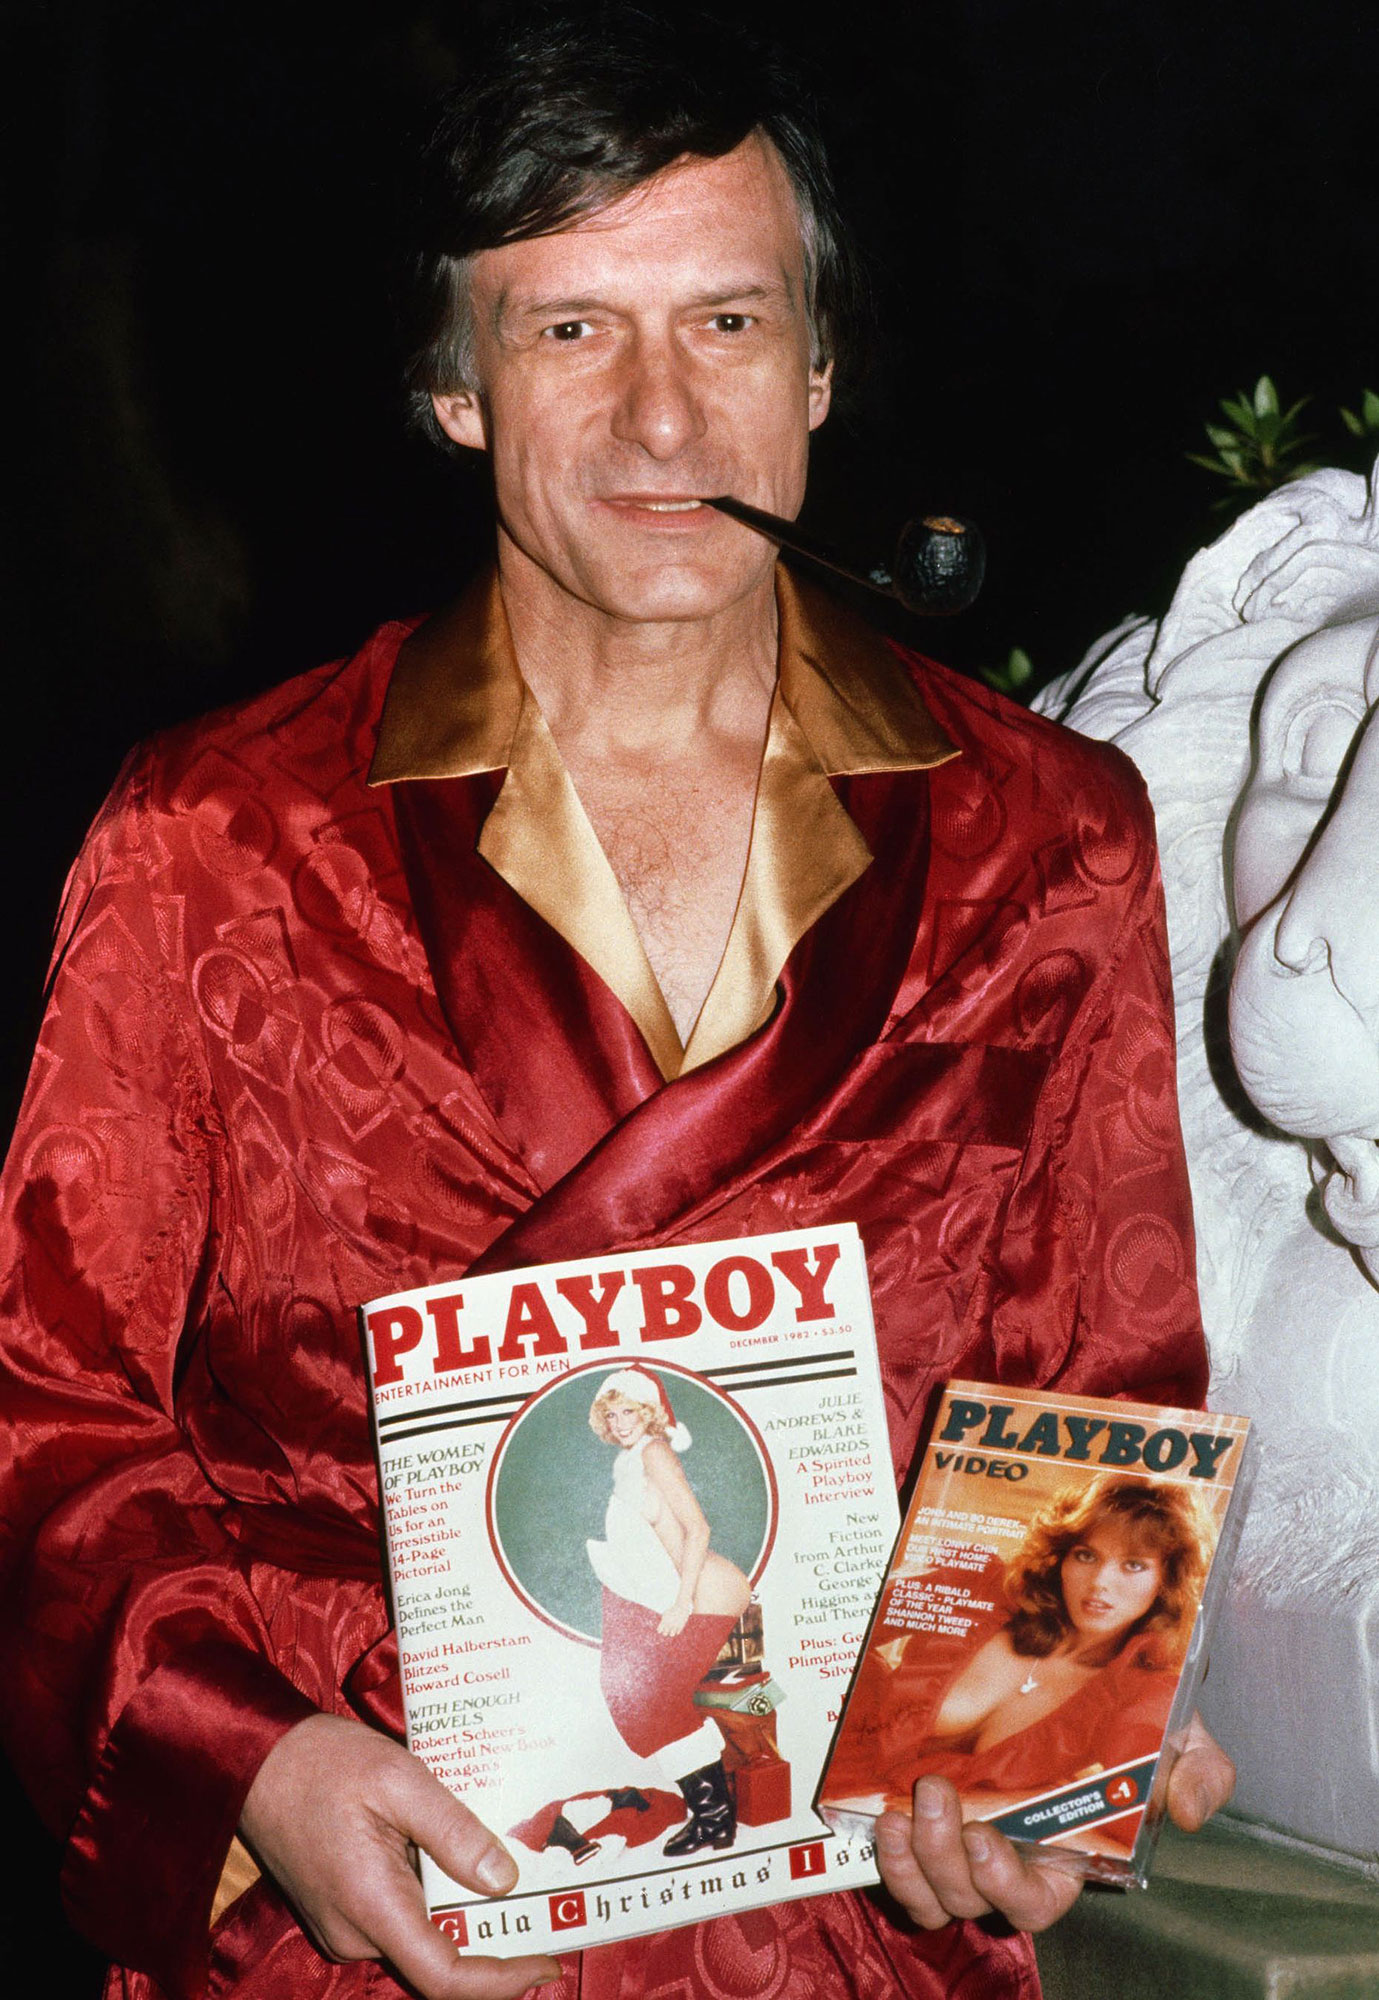 Secrets of Playboy Show Reveals Dark Side of Playboy Mansion